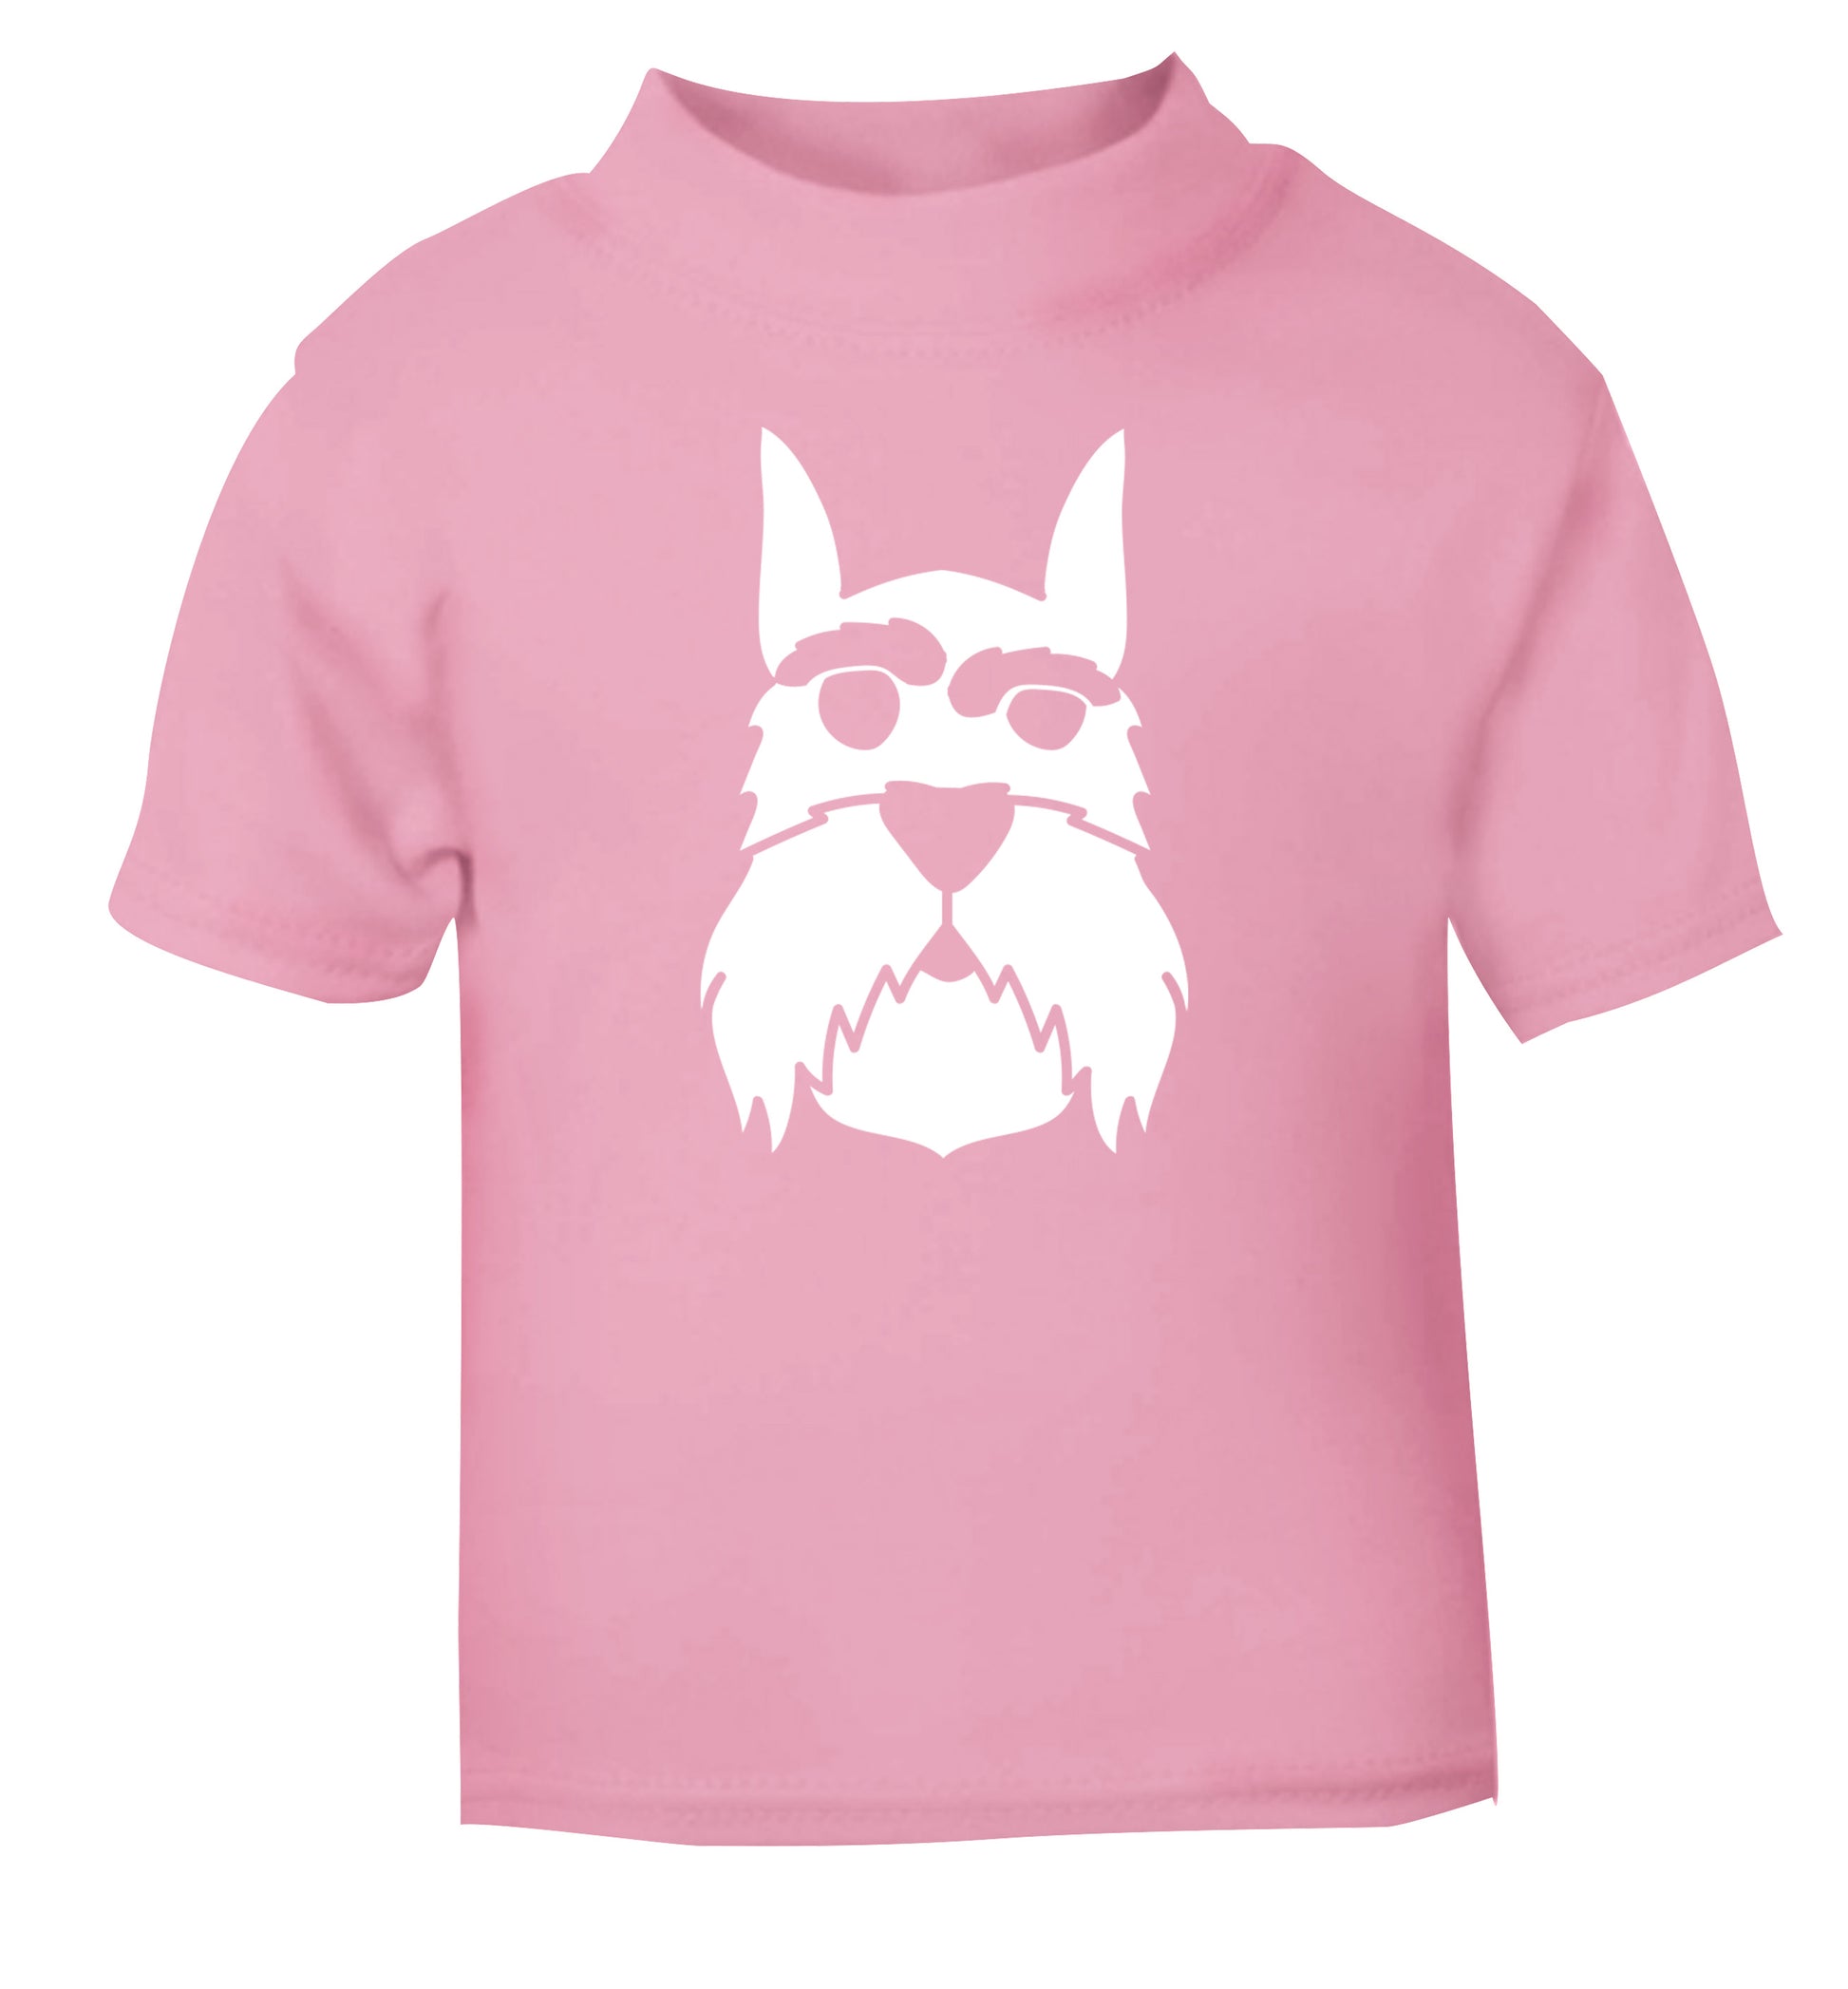 Schnauzer dog illustration light pink Baby Toddler Tshirt 2 Years